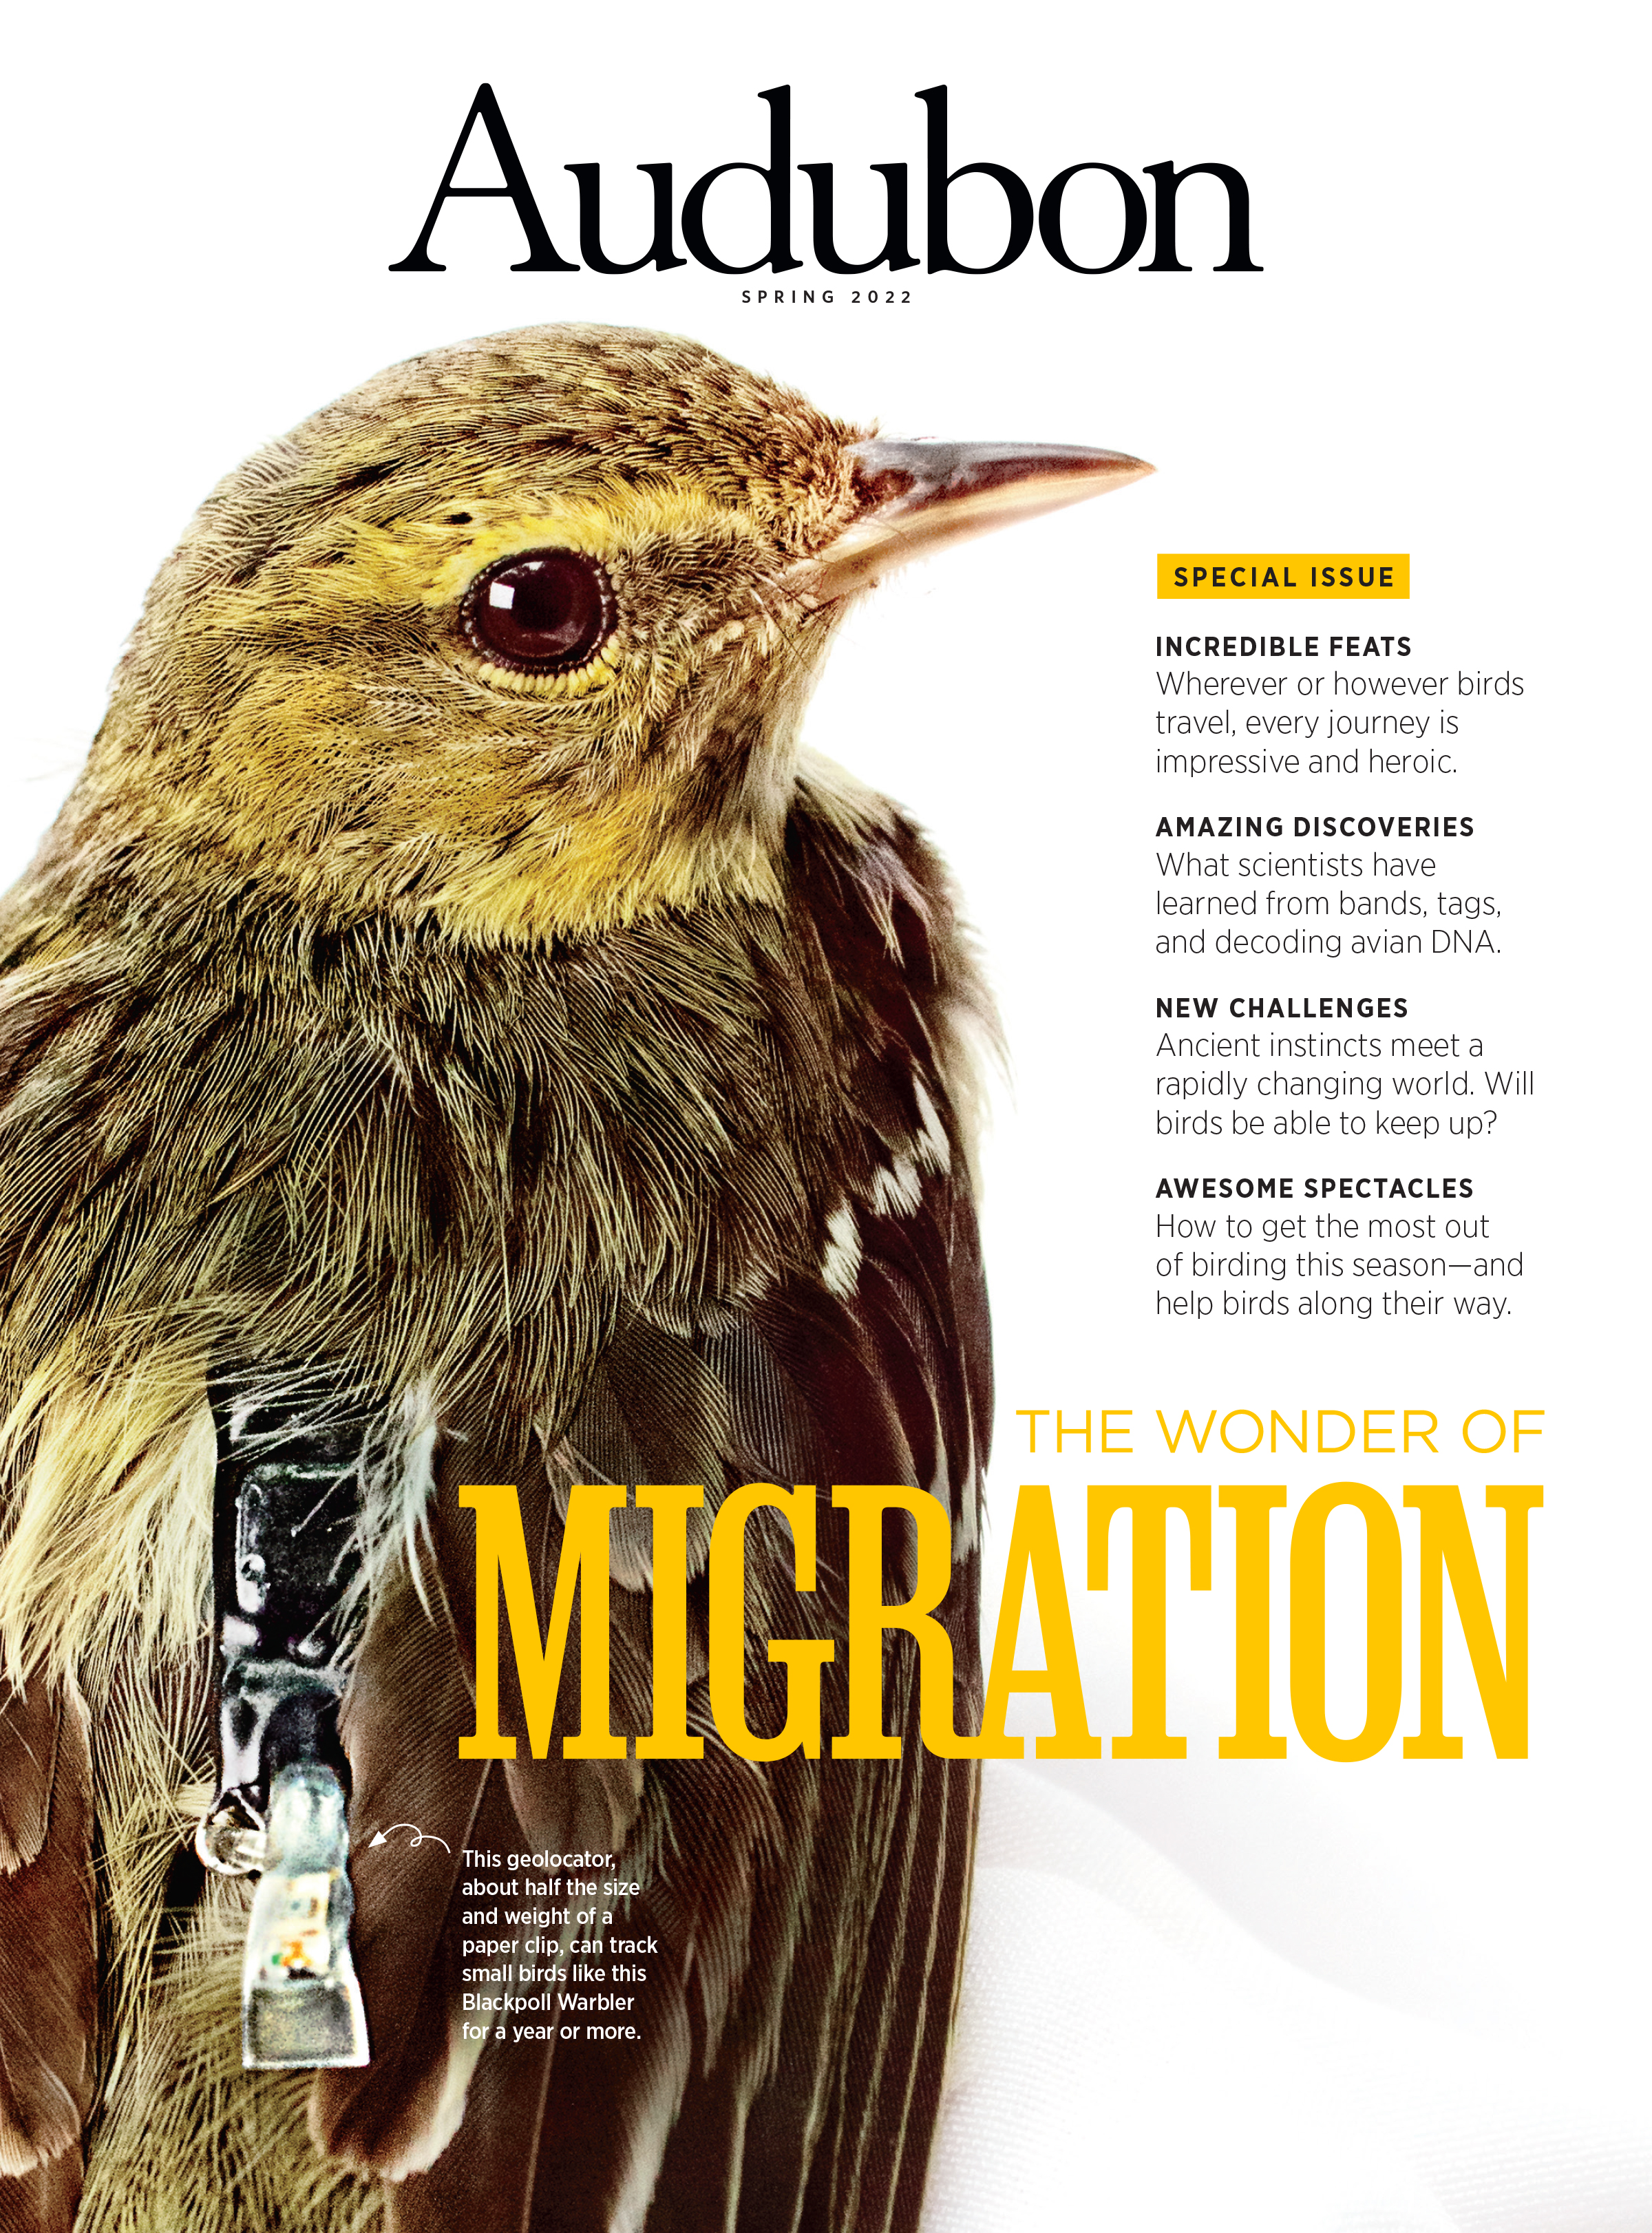 Blackpoll Warbler with geolocator, Spring 2022 Audubon Magazine.